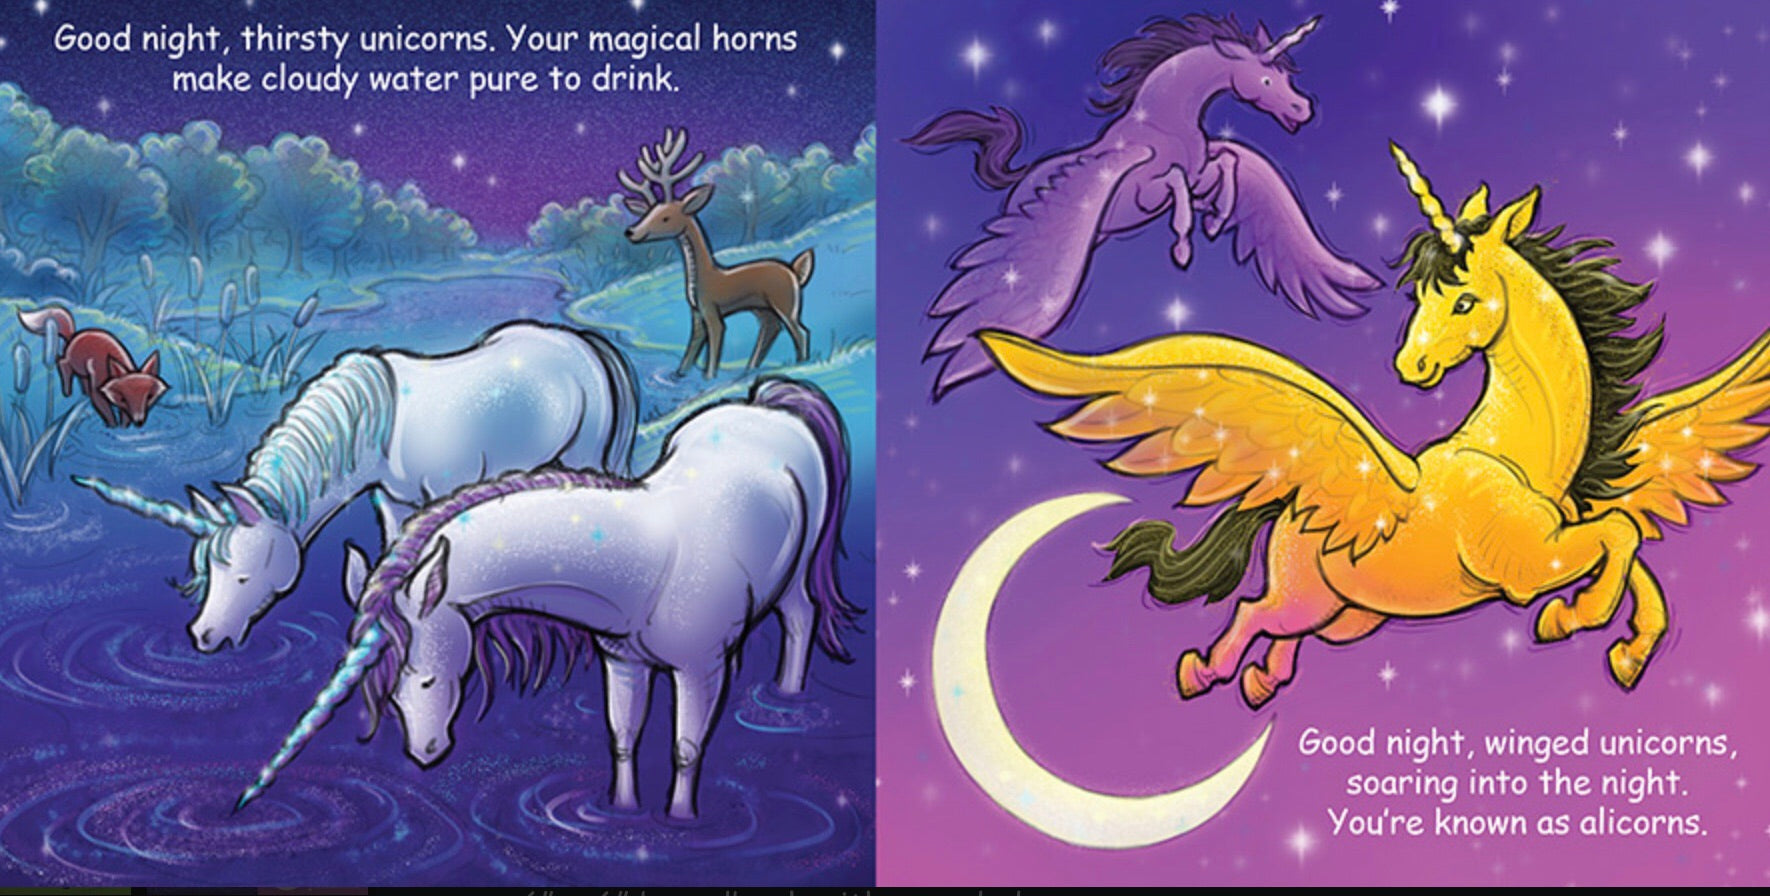 Good Night Unicorns Book  - Doodlebug's Children's Boutique